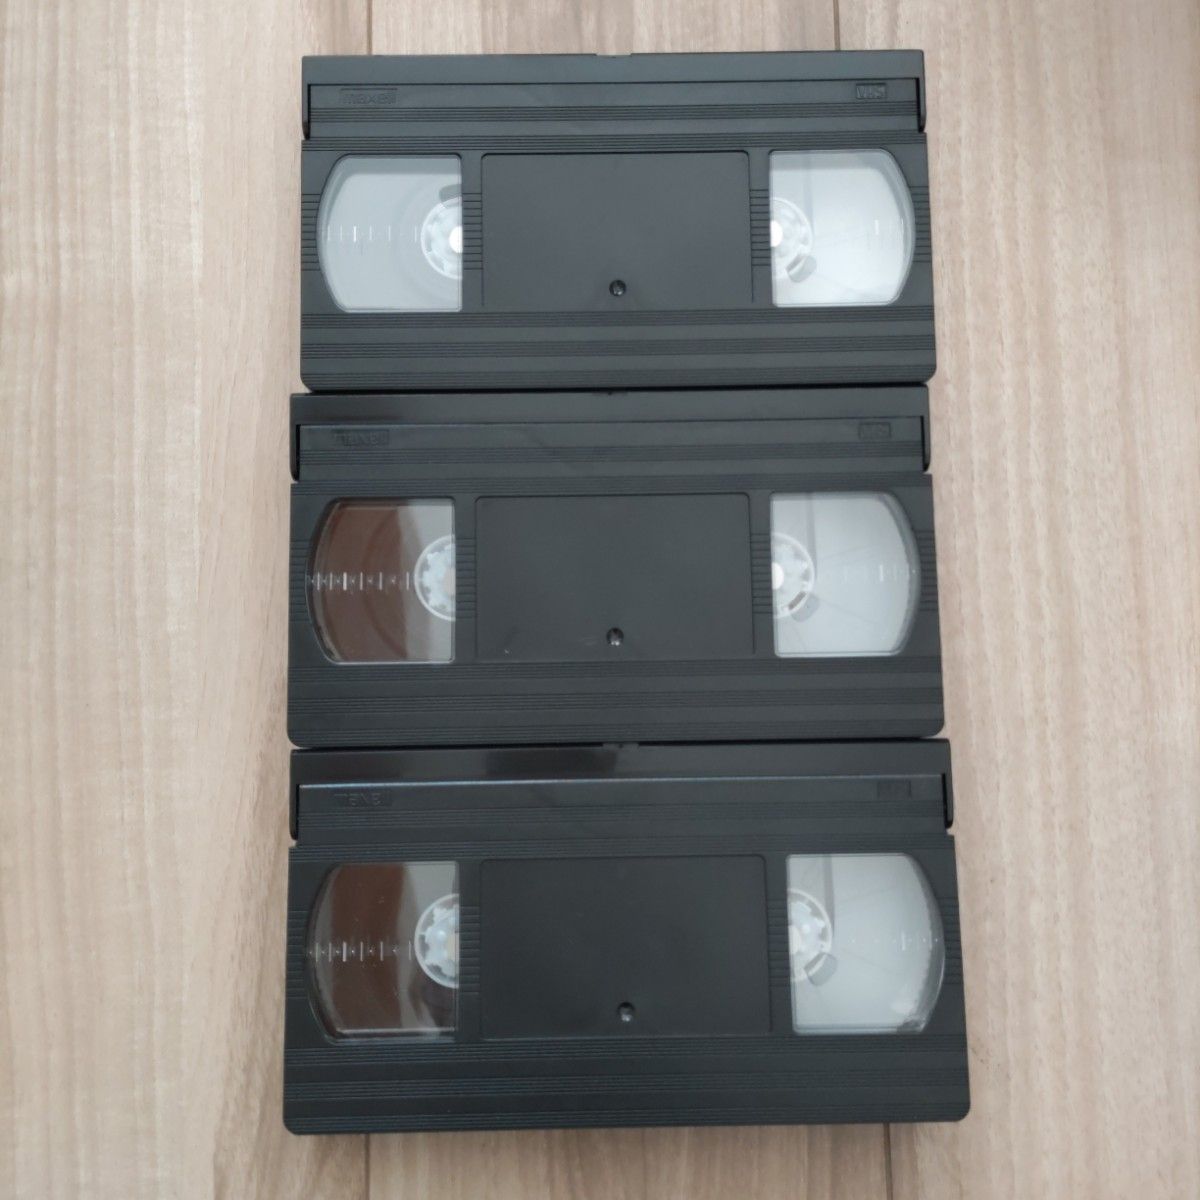 VHSビデオテープ maxell  3本